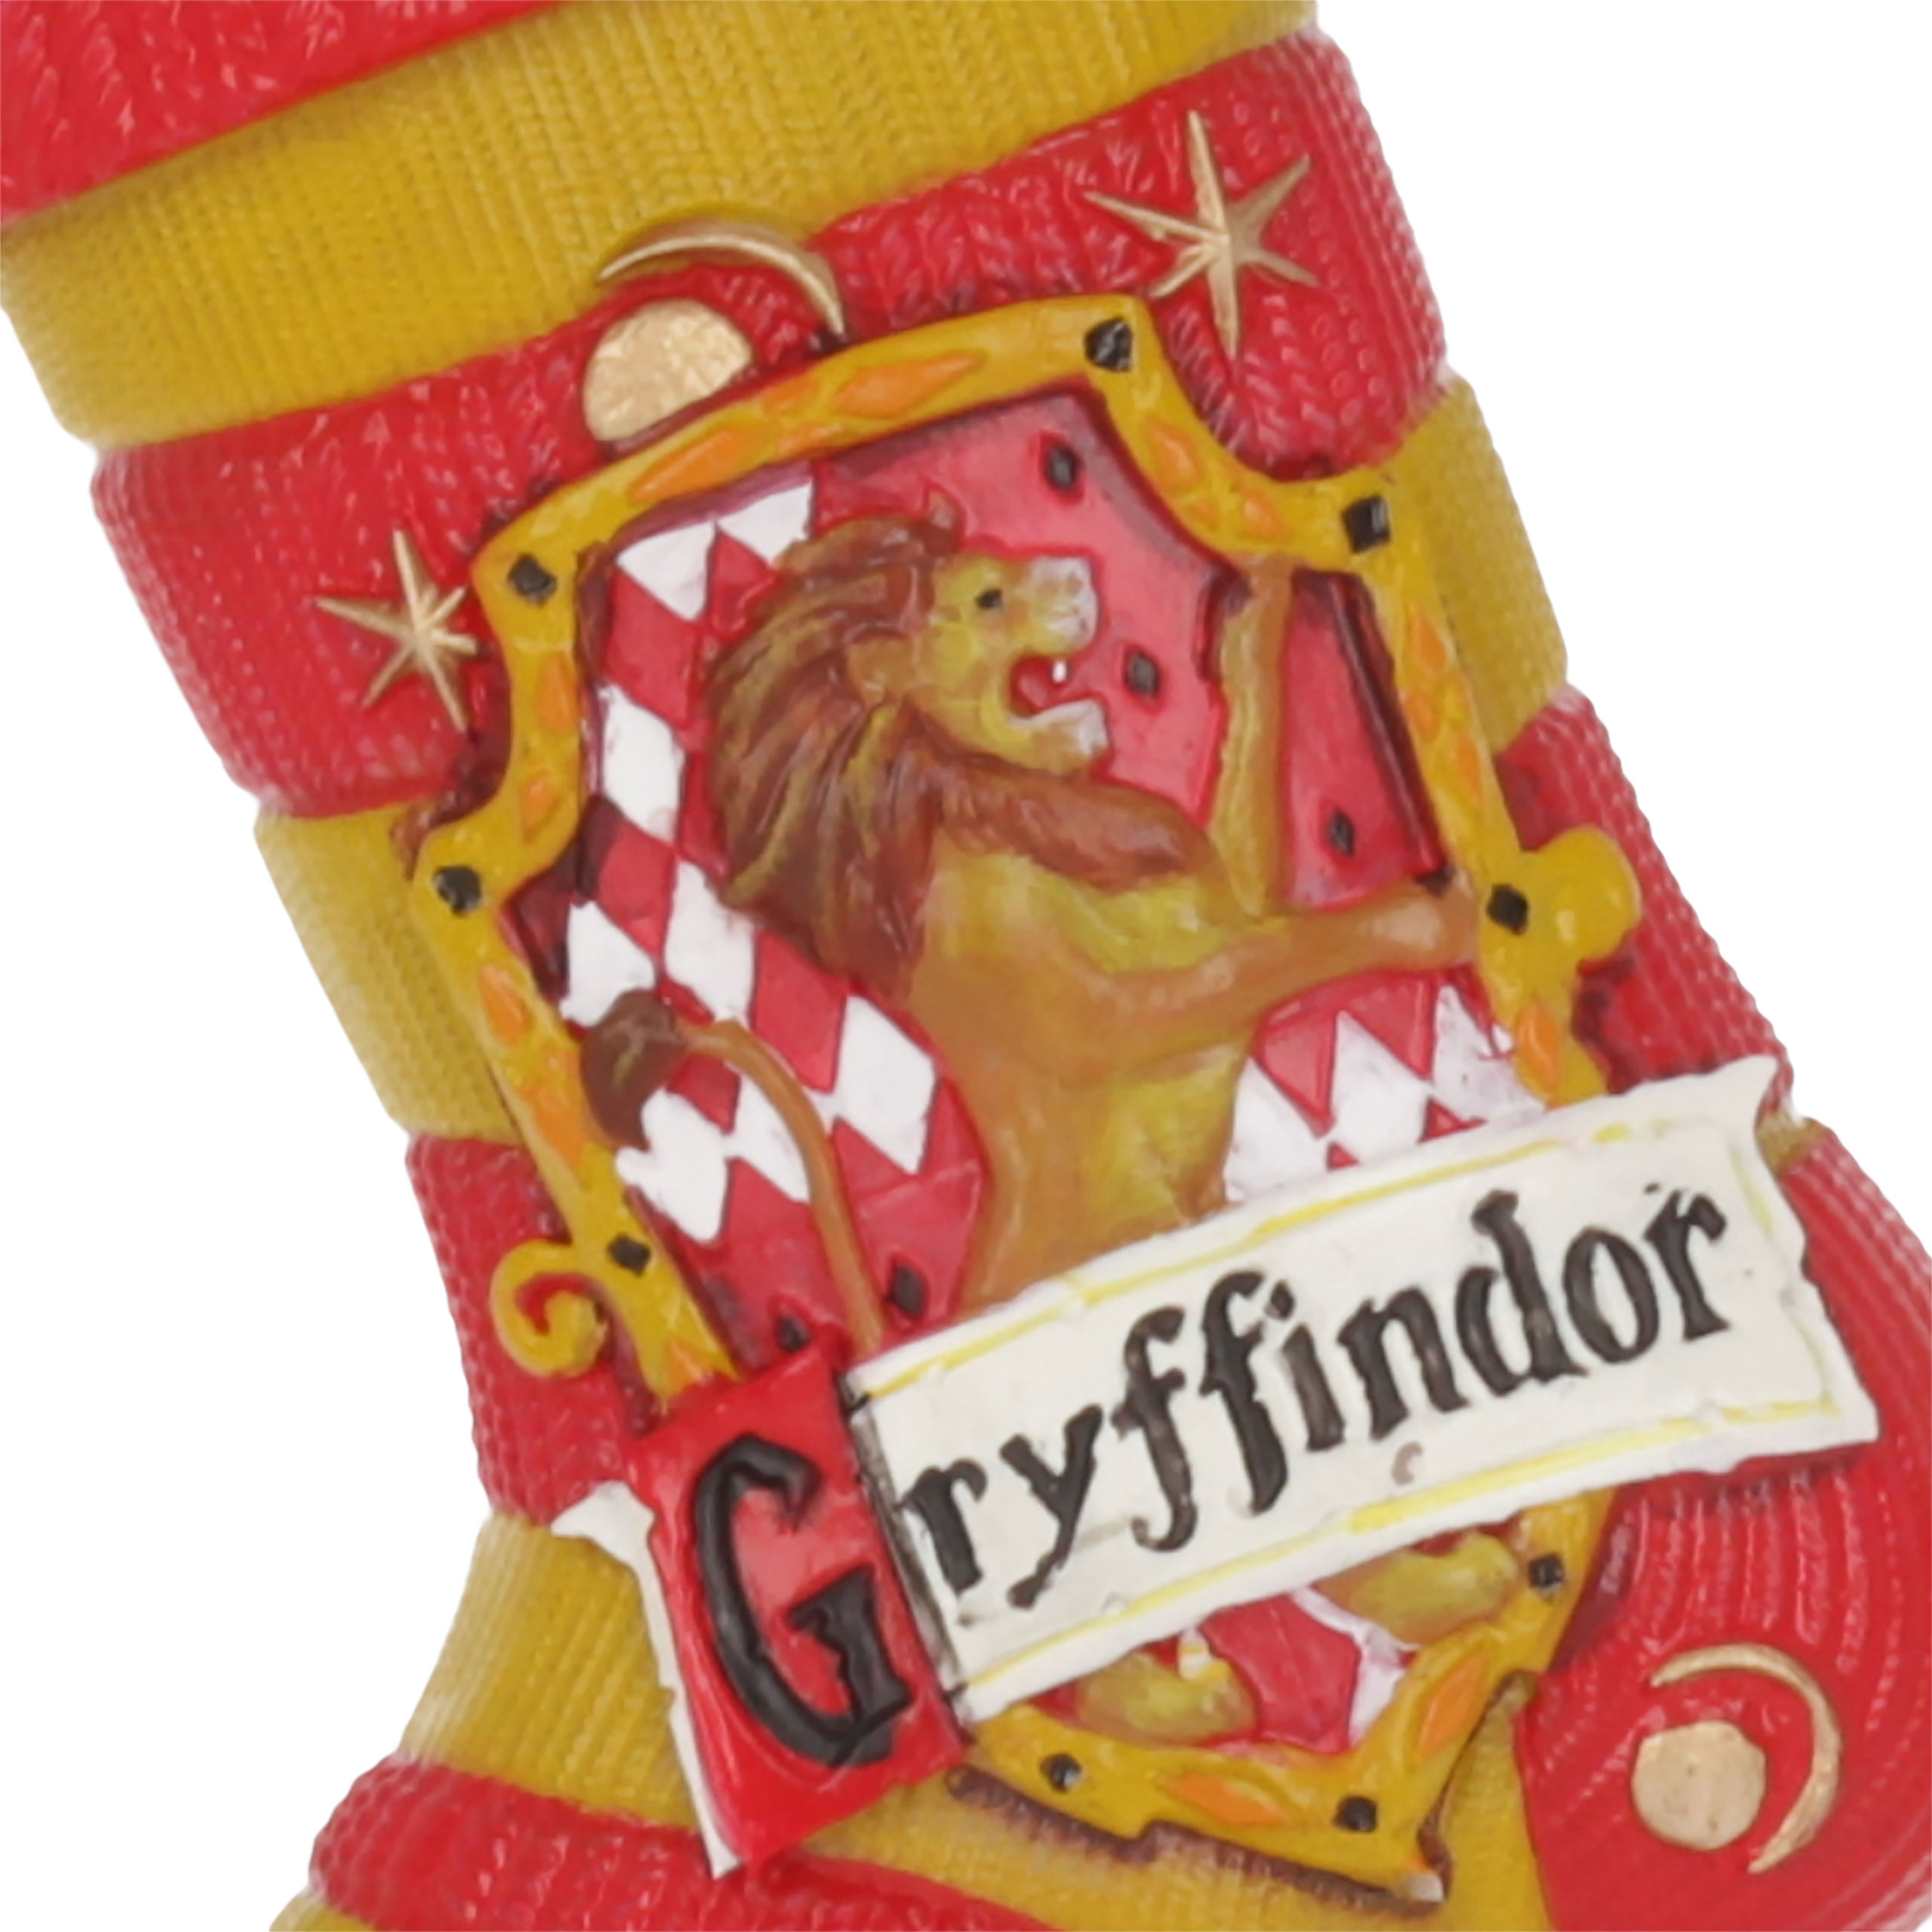 Harry Potter - Gryffindor Sock Christmas Tree Ornament